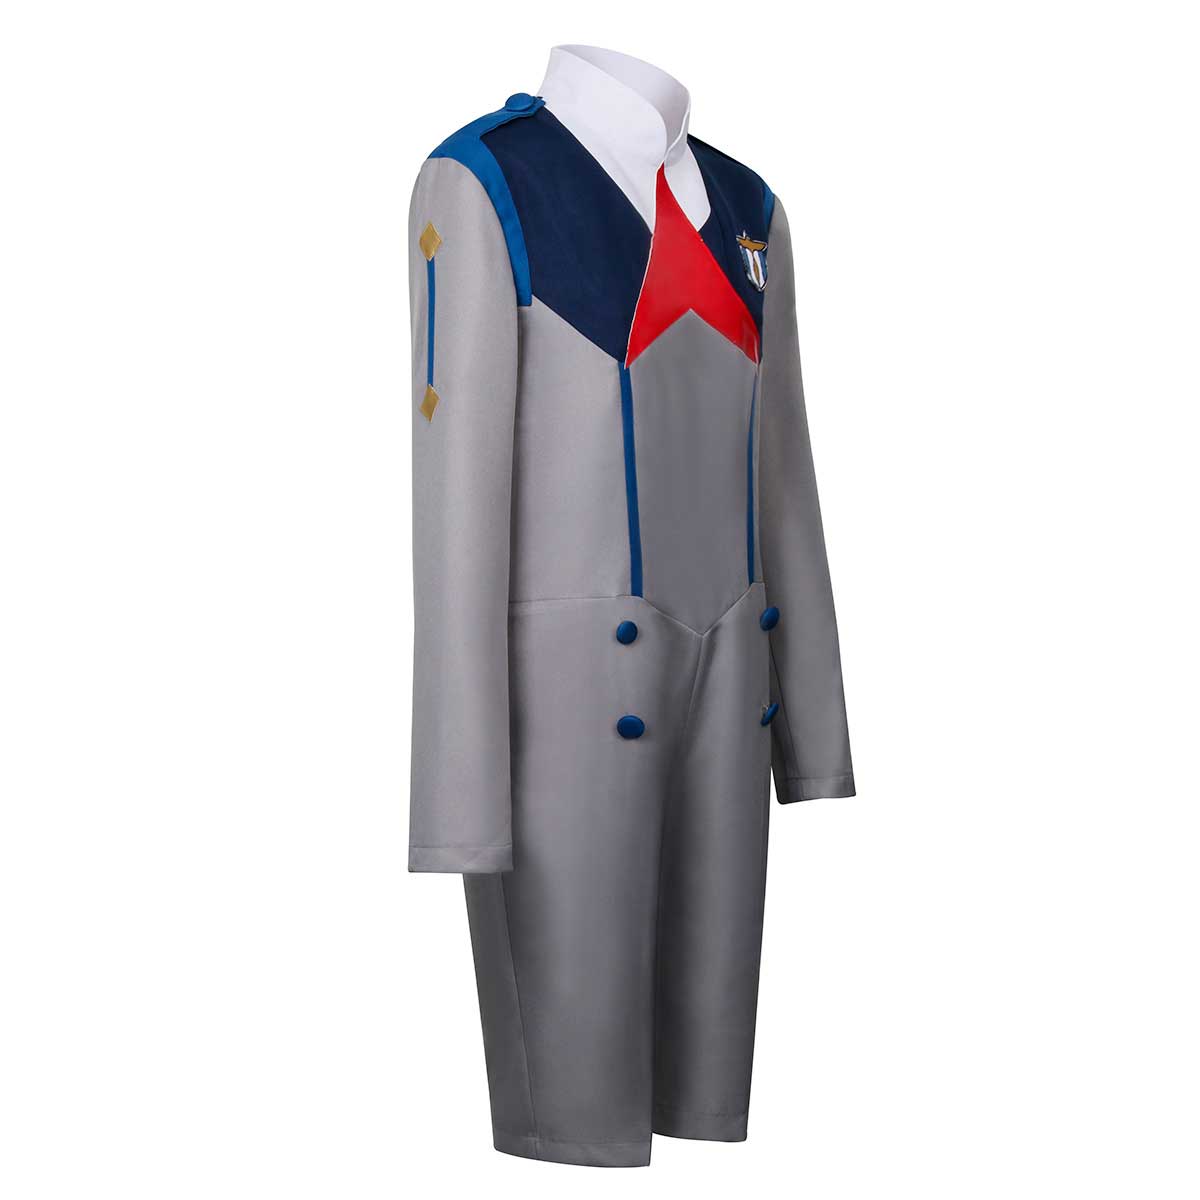 DARLING in the FRANXX Hiro Code : 016 Uniform Cosplay Costume